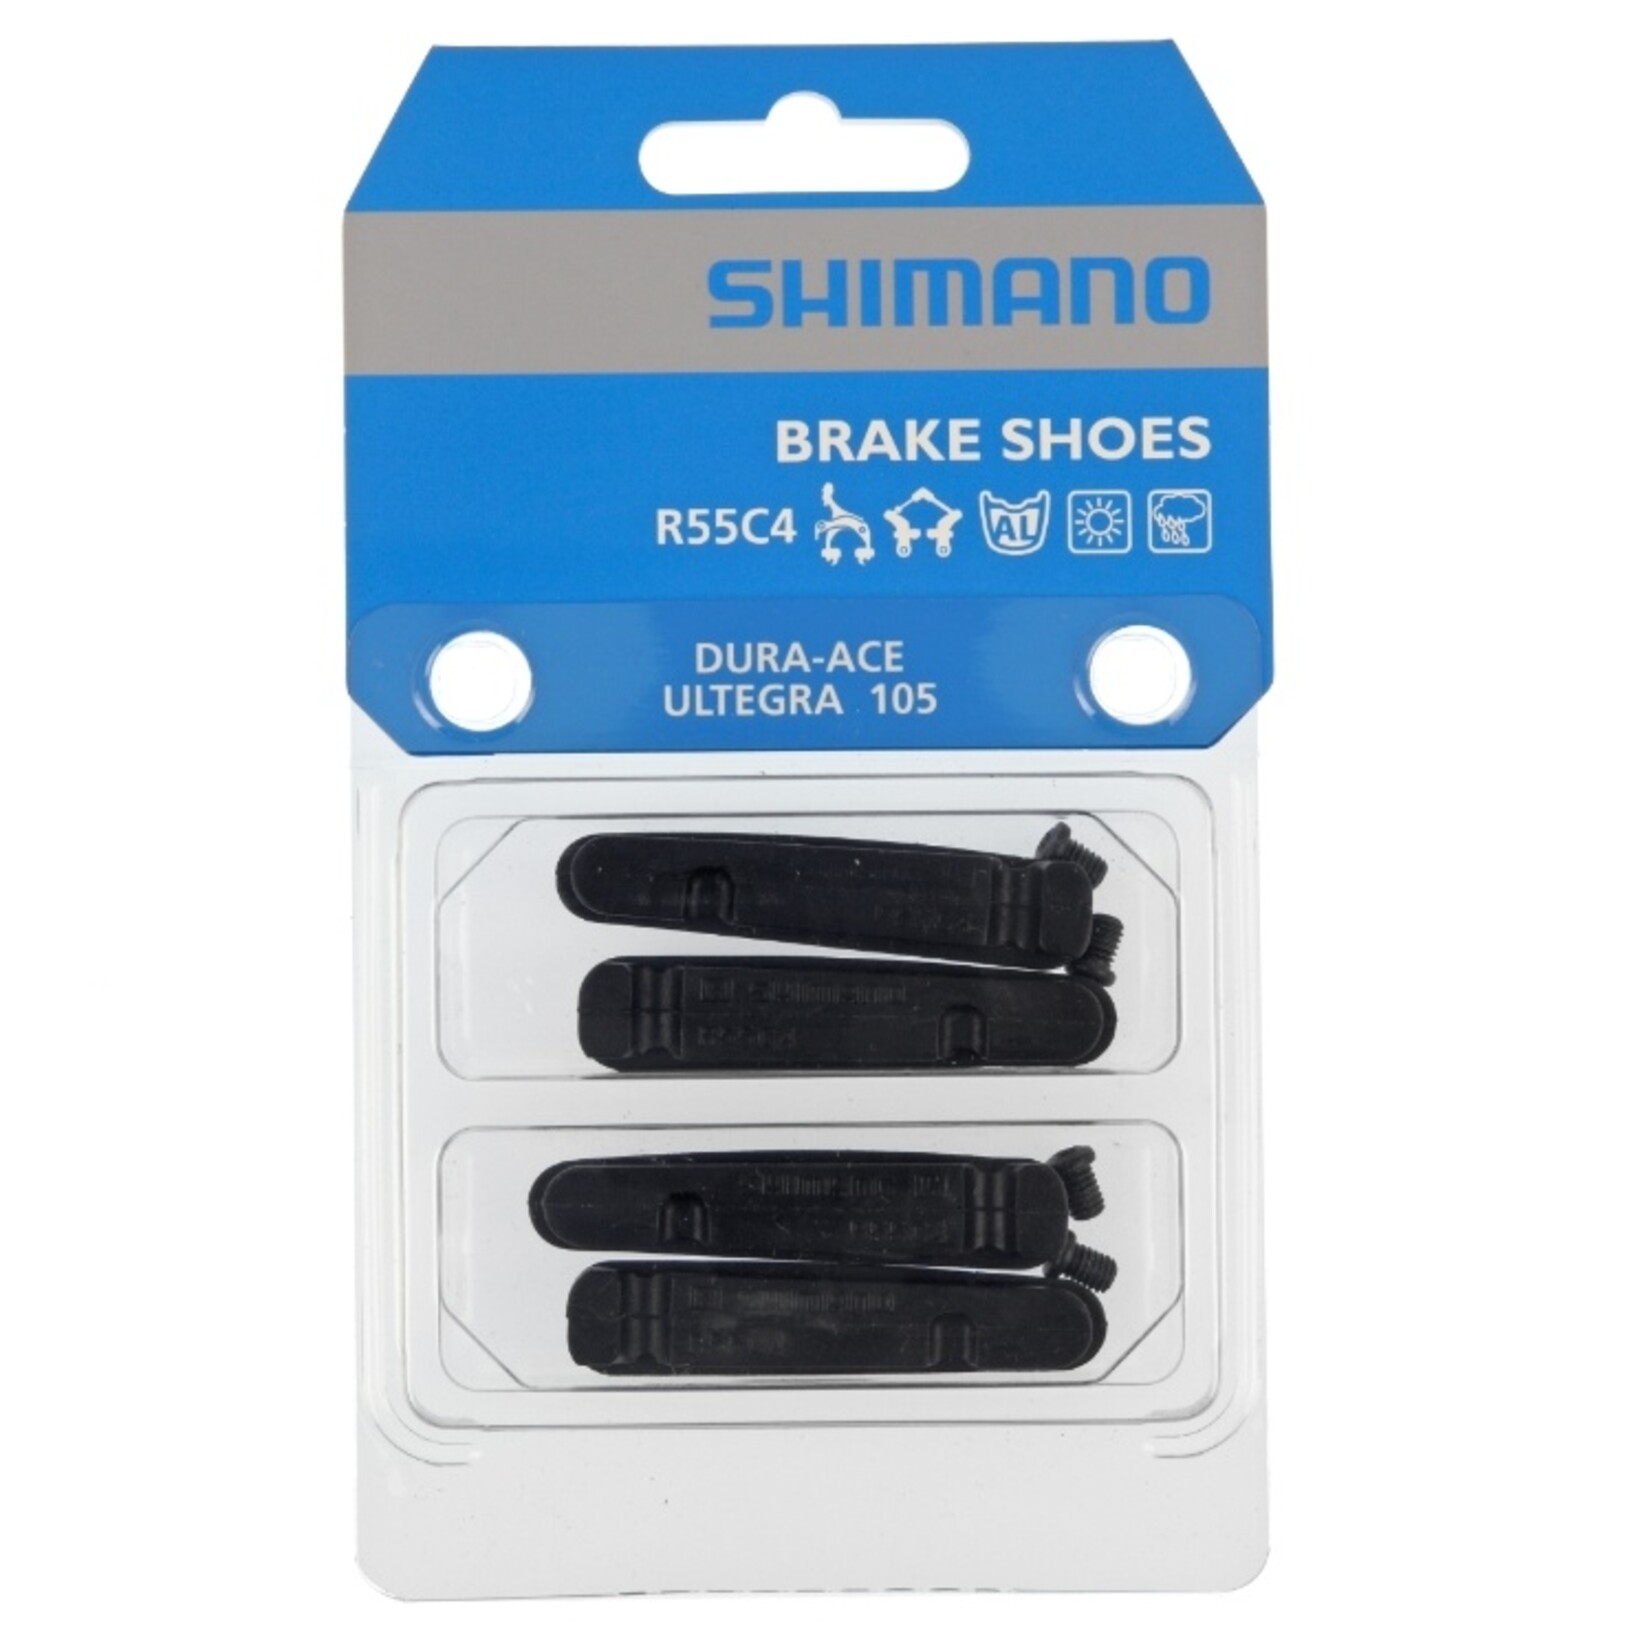 SHIMANO Shimano R55C4 BR-9000/9100 Aluminum Rim Brake Pad Inserts